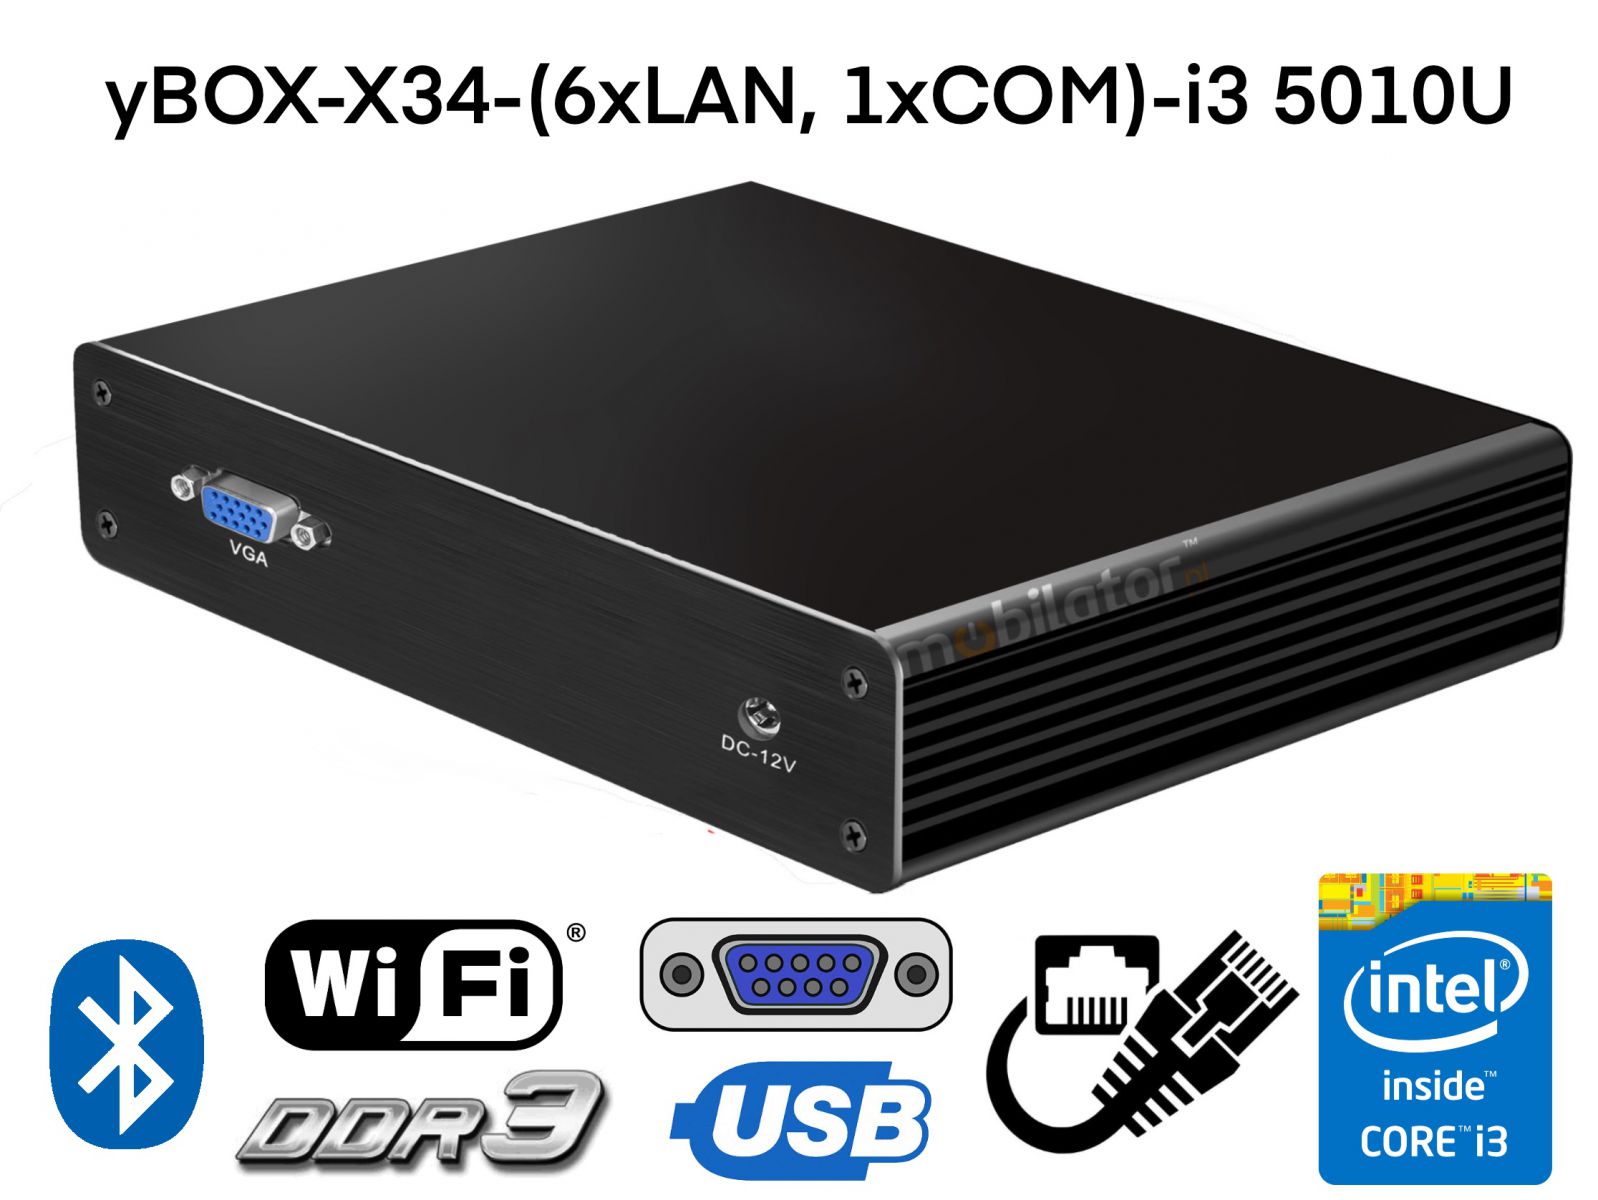 MiniPC yBOX-X34-(6xLAN, 1xCOM)-i3 5010U v.5 – robust, passively cooled small industrial computer with Intel Core i3, 16GB RAM and 1TB SSD